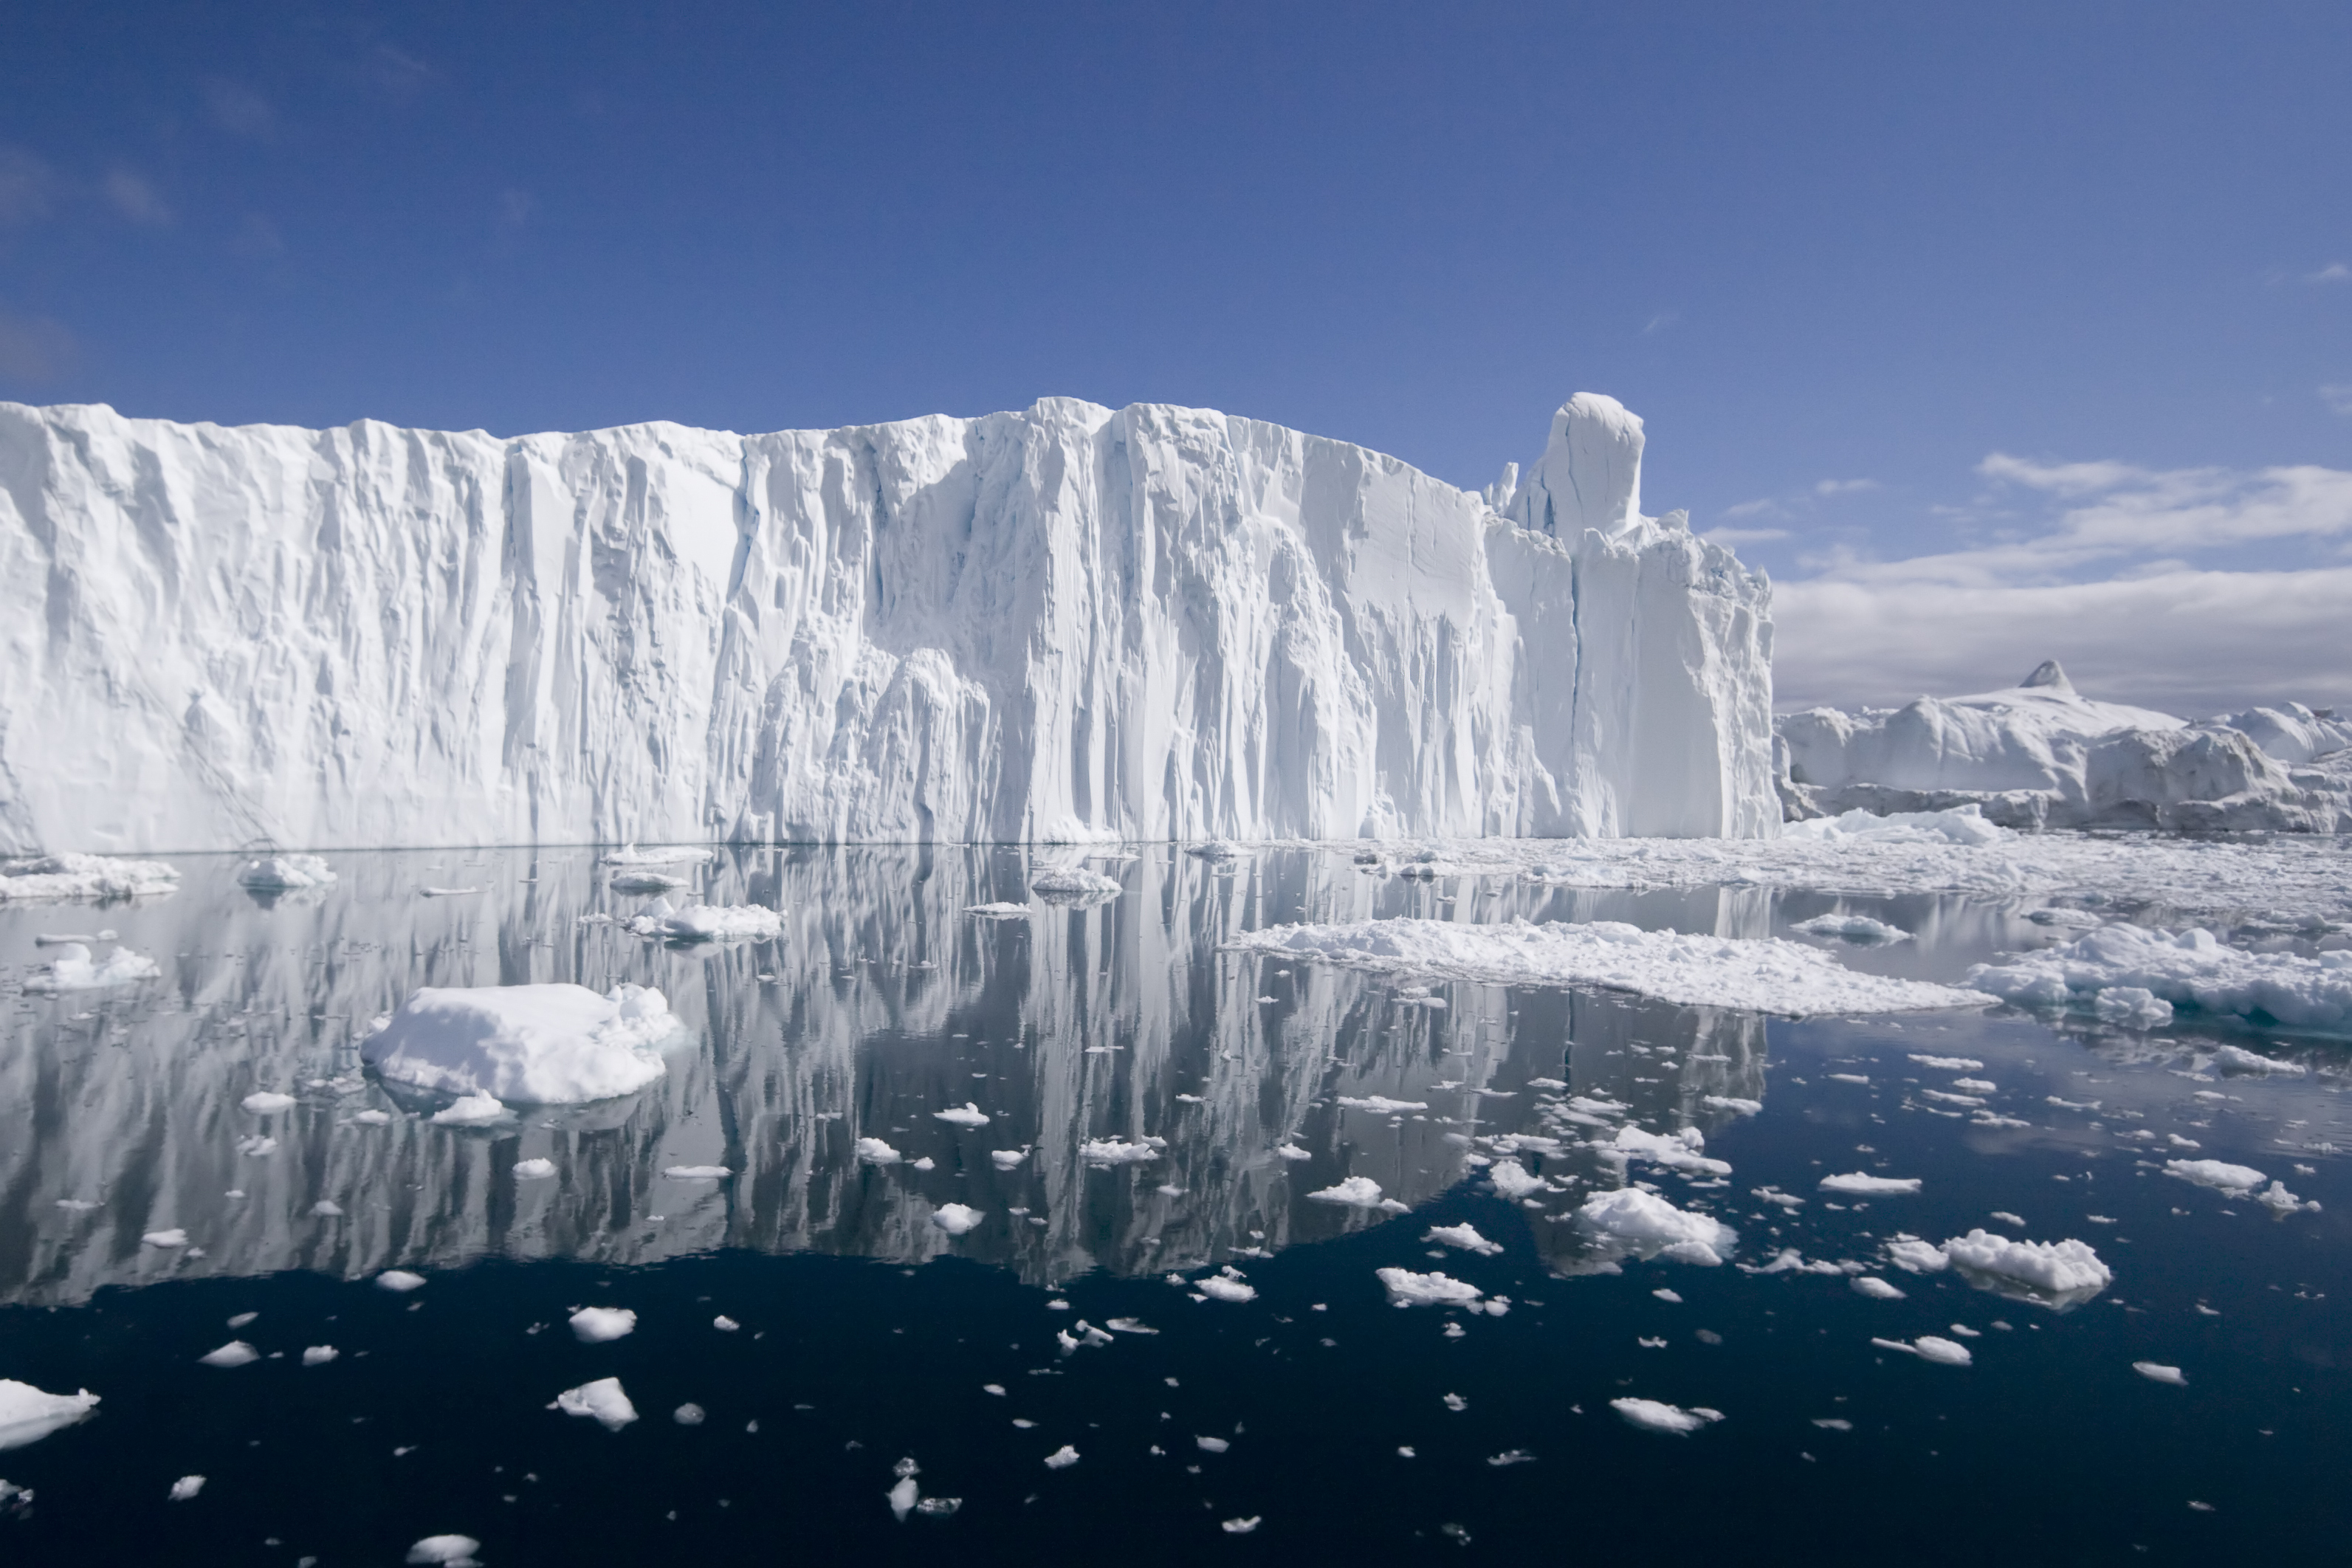 Ilulissat, or iceberg, in Greenland